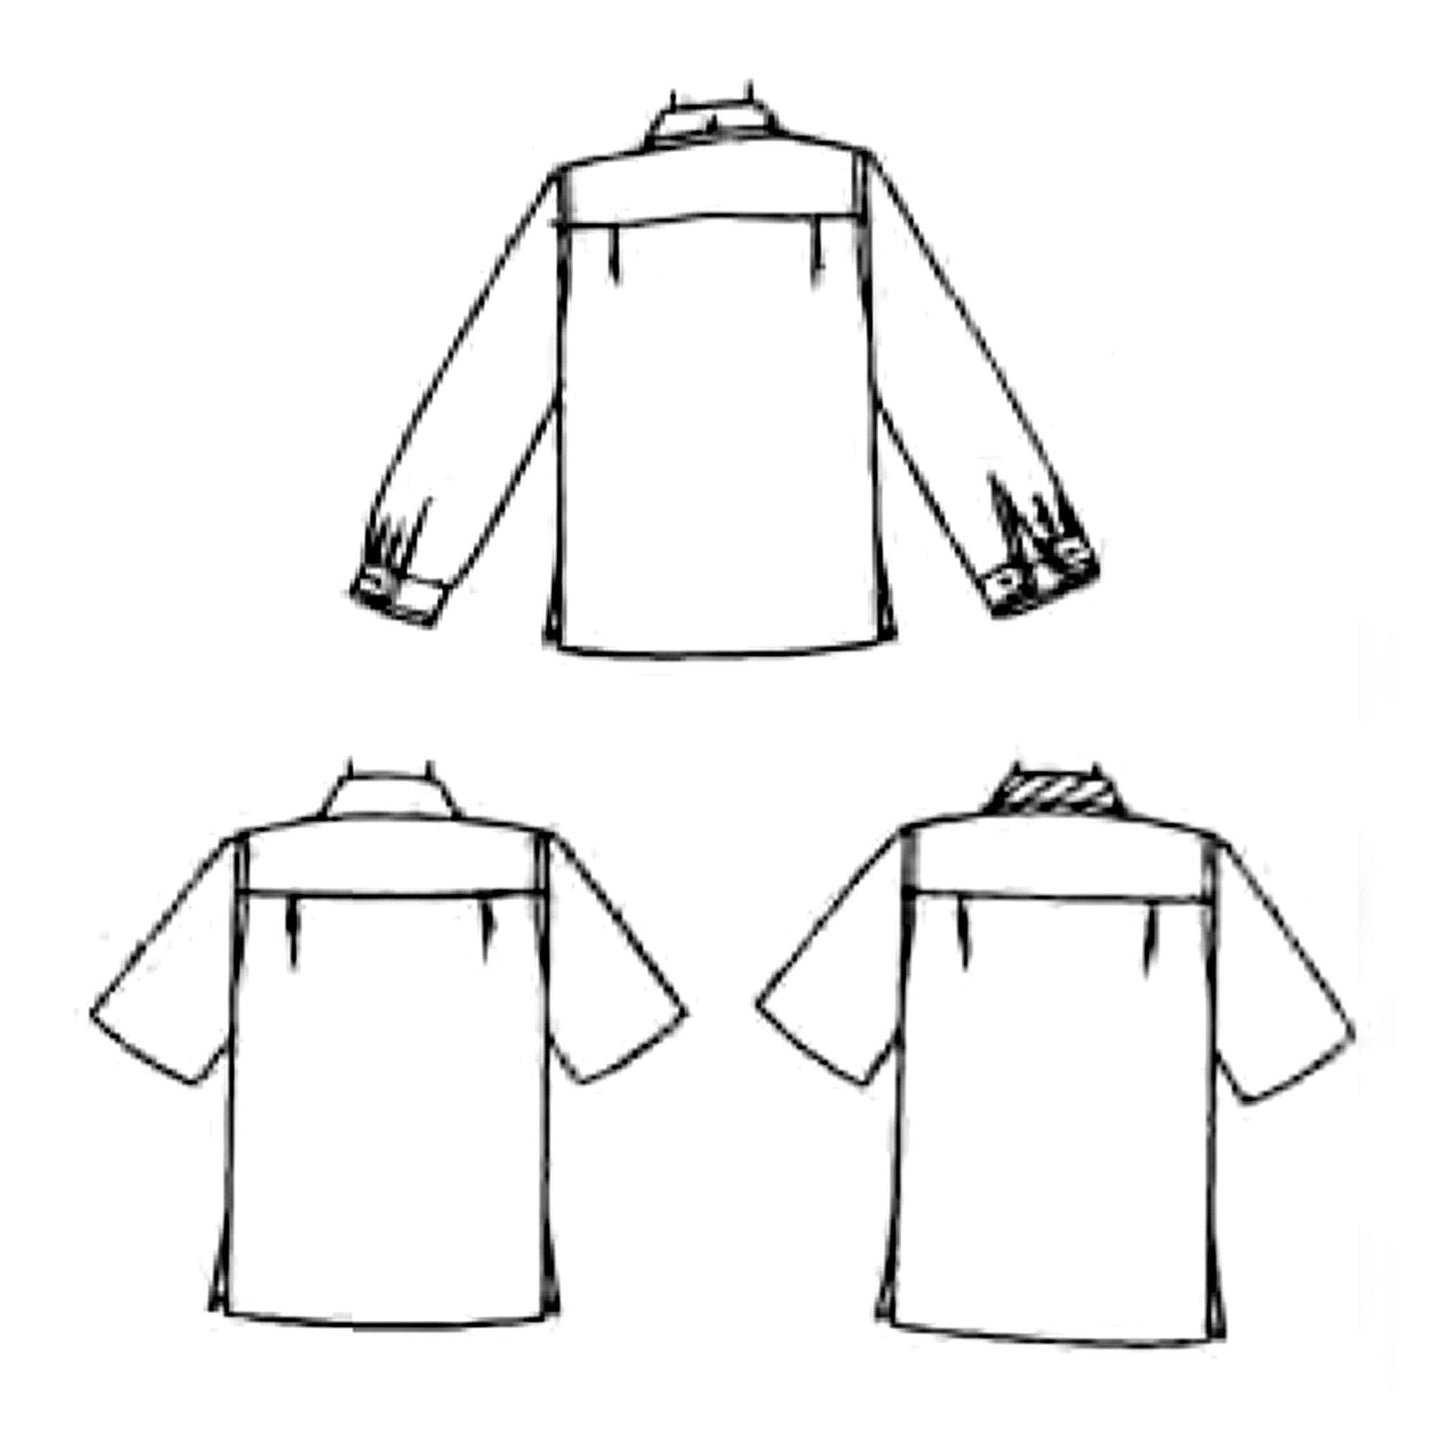 1950s Pattern, Men's Set of Sports Shirt - Line drawing of back views